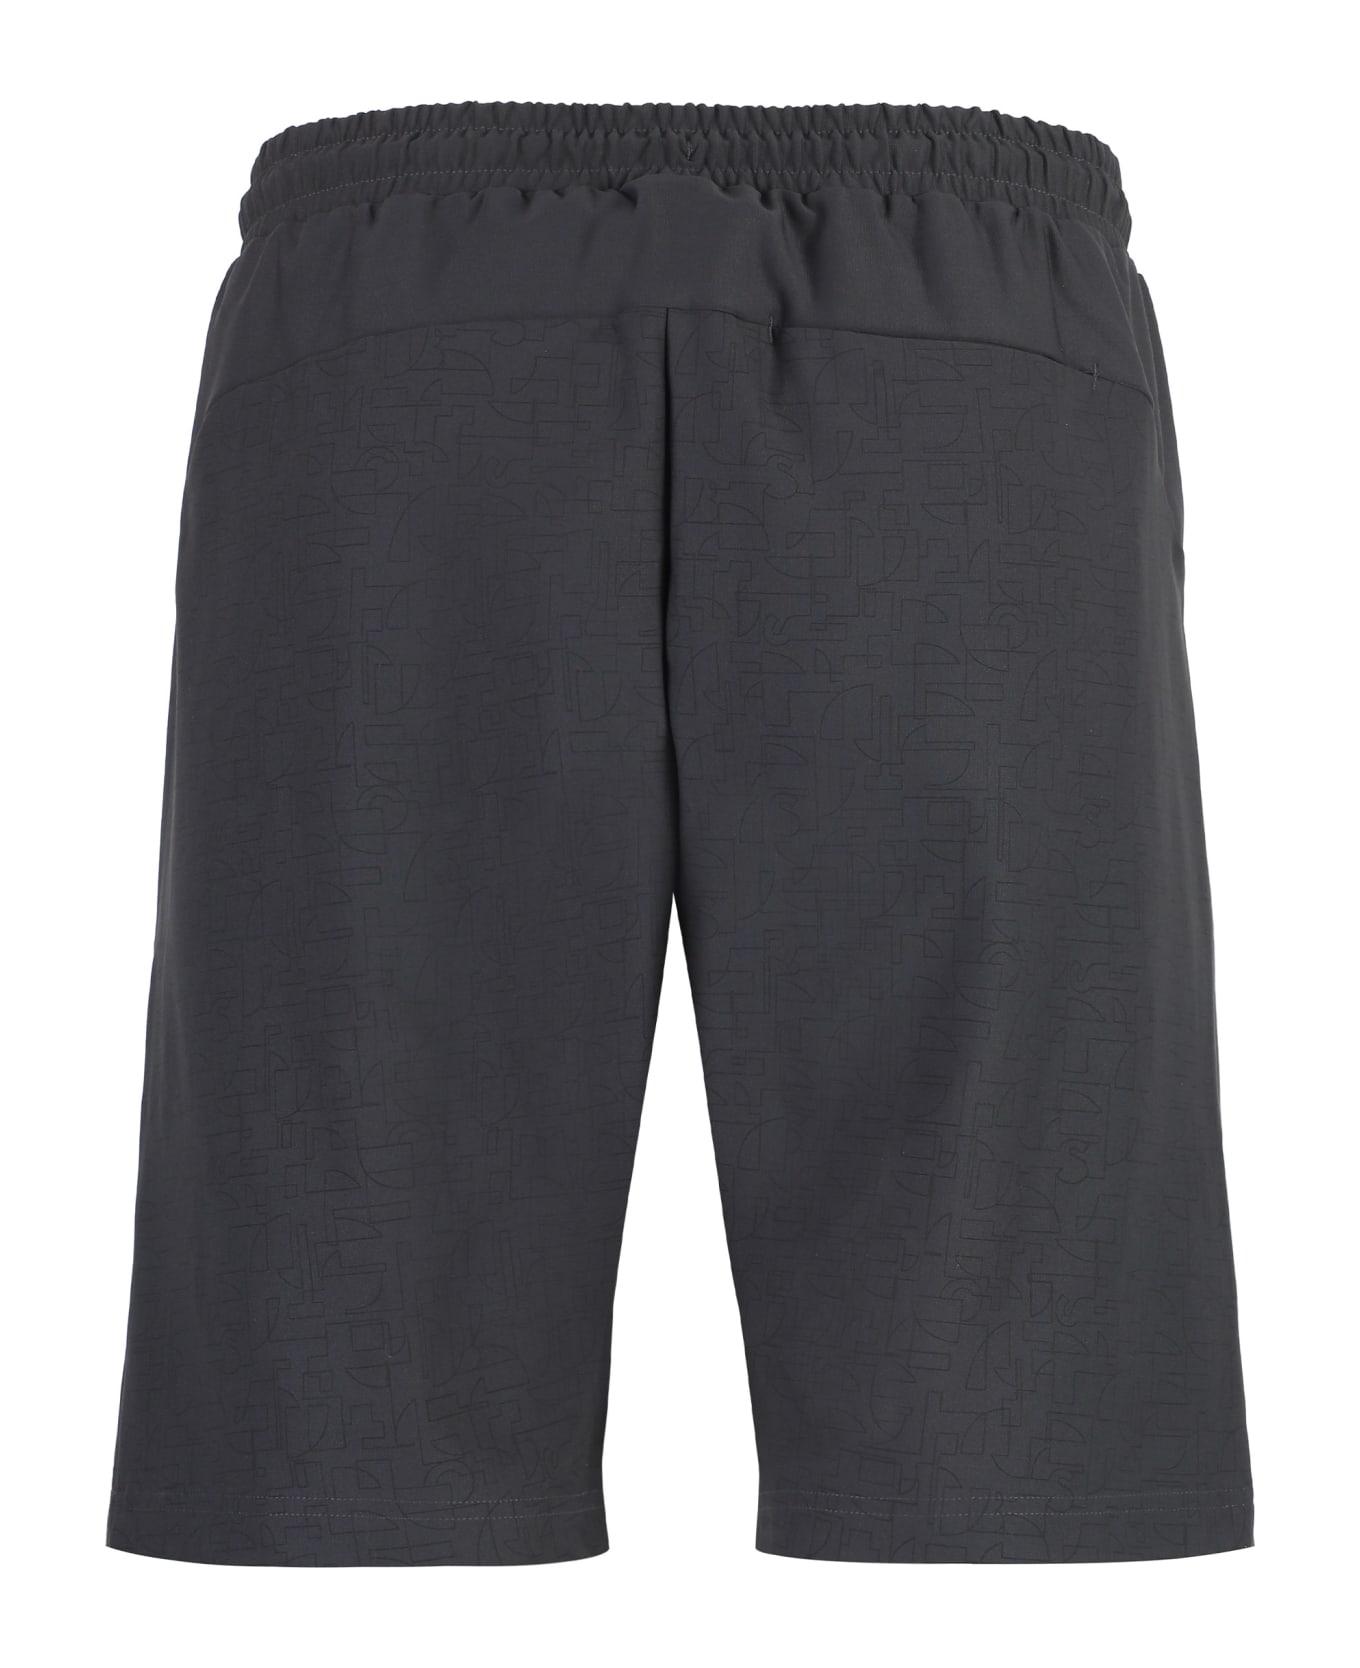 Hugo Boss Hecon Techno Fabric Bermuda-shorts - grey